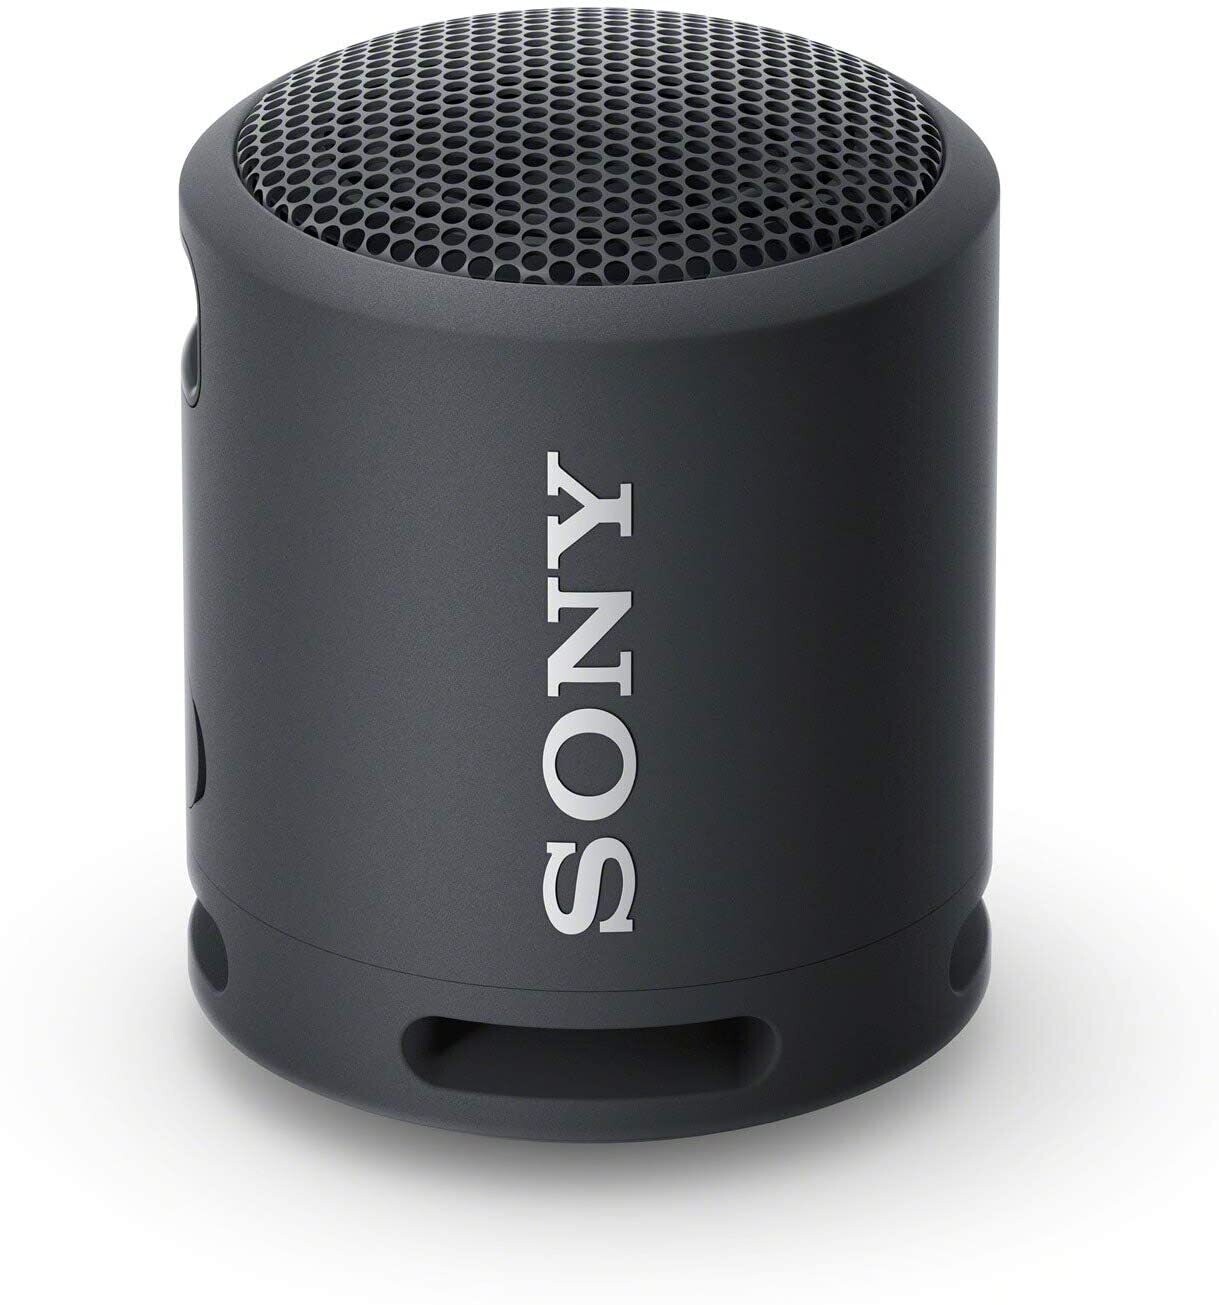 Sony SRS-XB13 Extra BASS Wireless Portable Compact Speaker IP67 Waterproof Bluetooth, Black